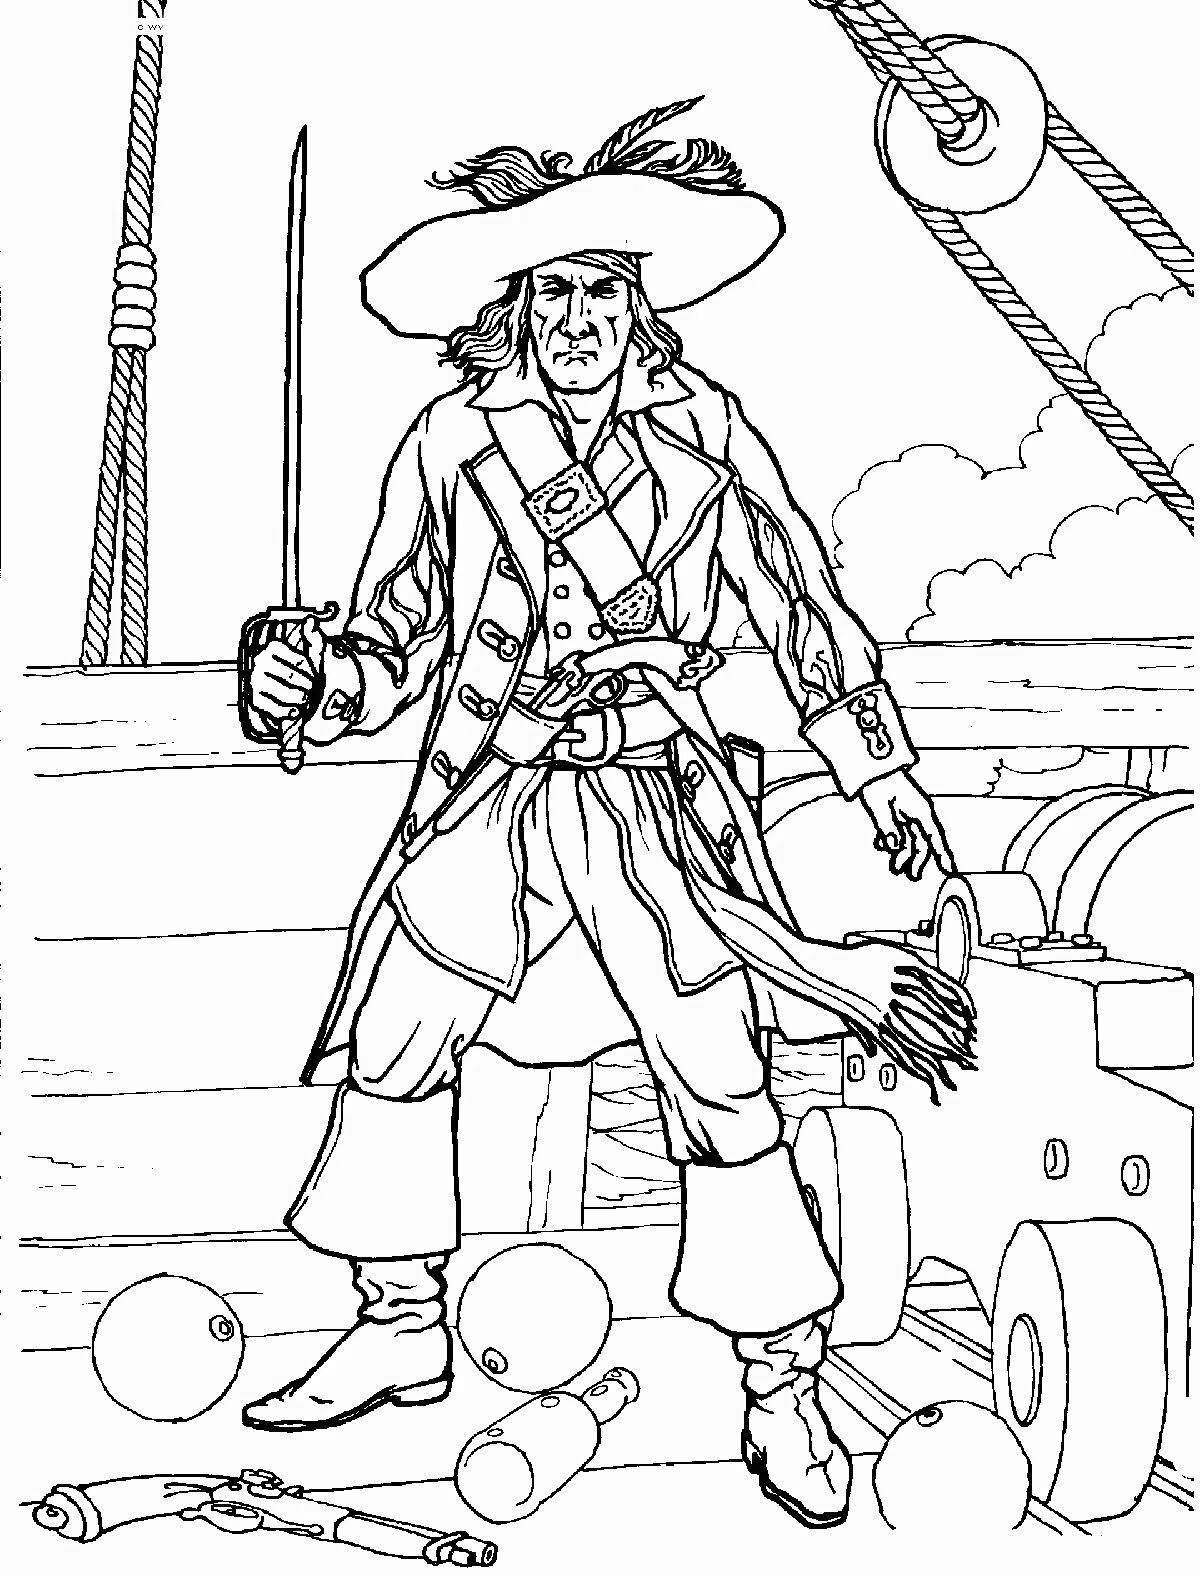 Playful pirate coloring book